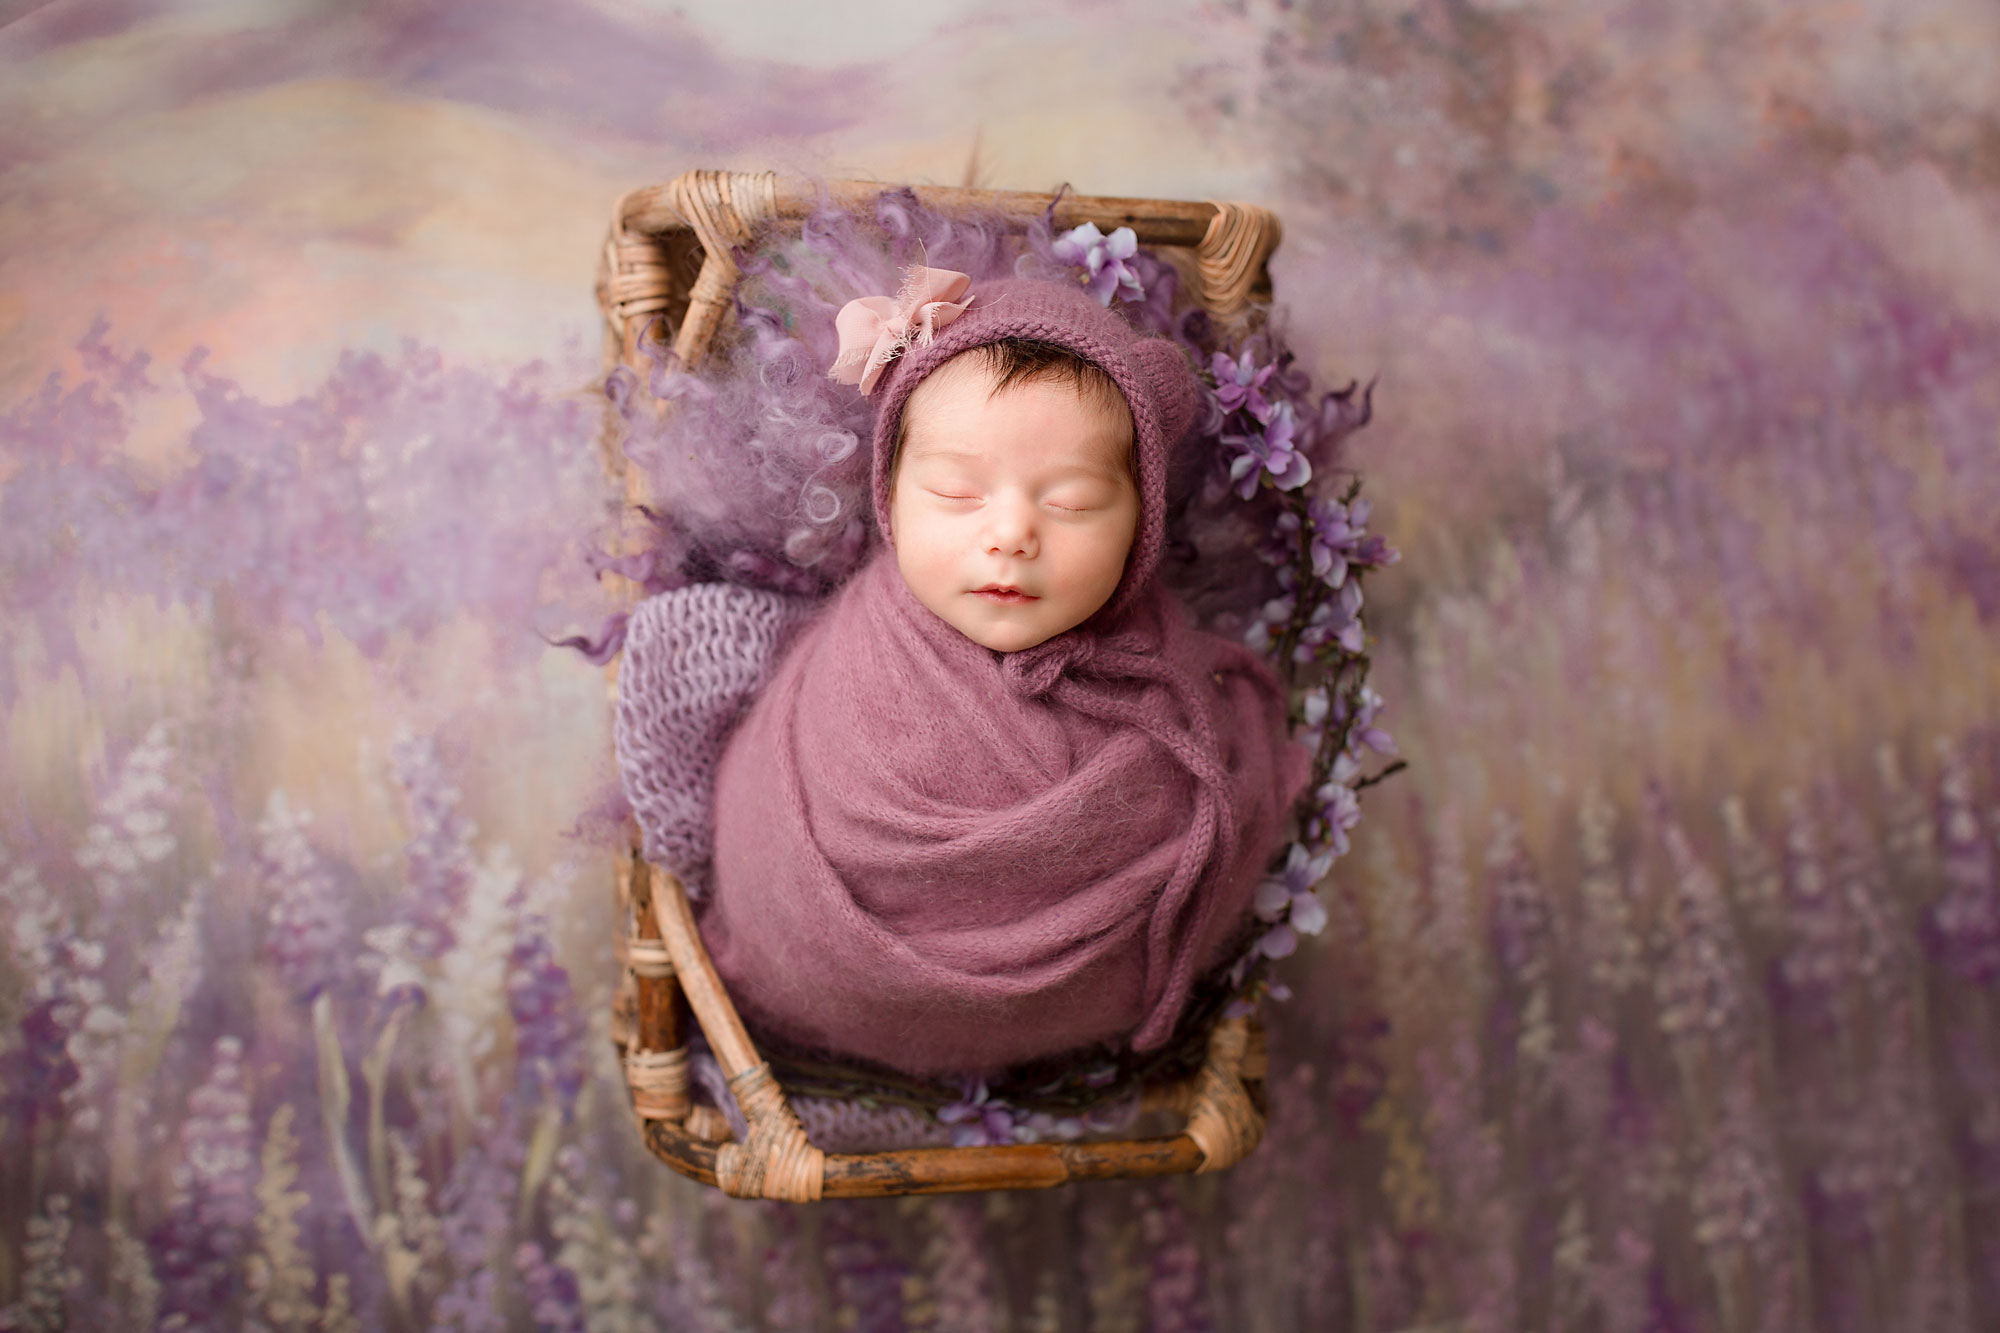 NJ newborn photographer capturing baby girl sleeping in a wooden bed